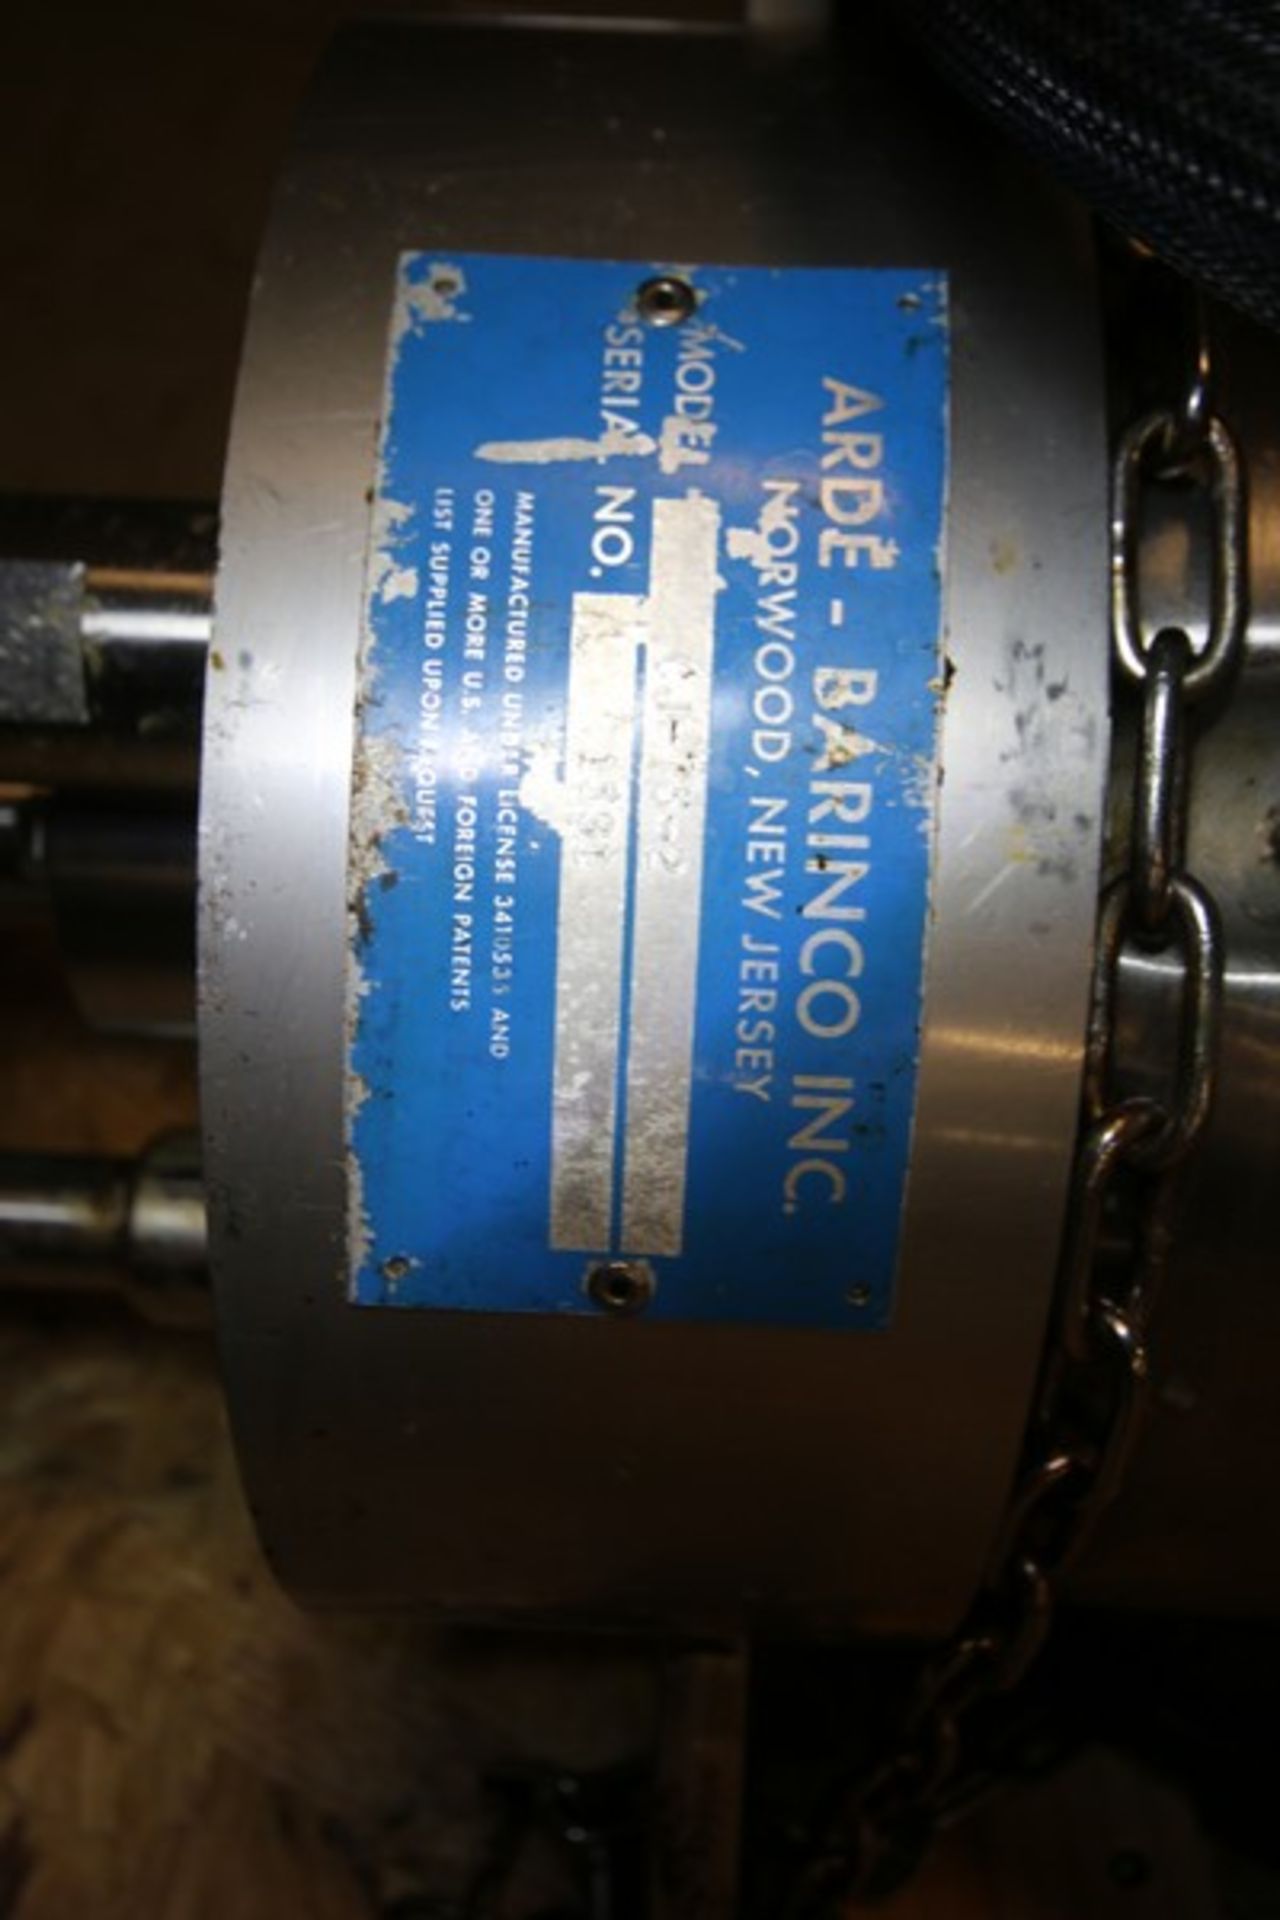 Arde -Barinco Inc. 10 hp High Shear Homogenizer Mixer, Model CJ-75-2, SN 1591, with 7" Diameter - Image 7 of 7